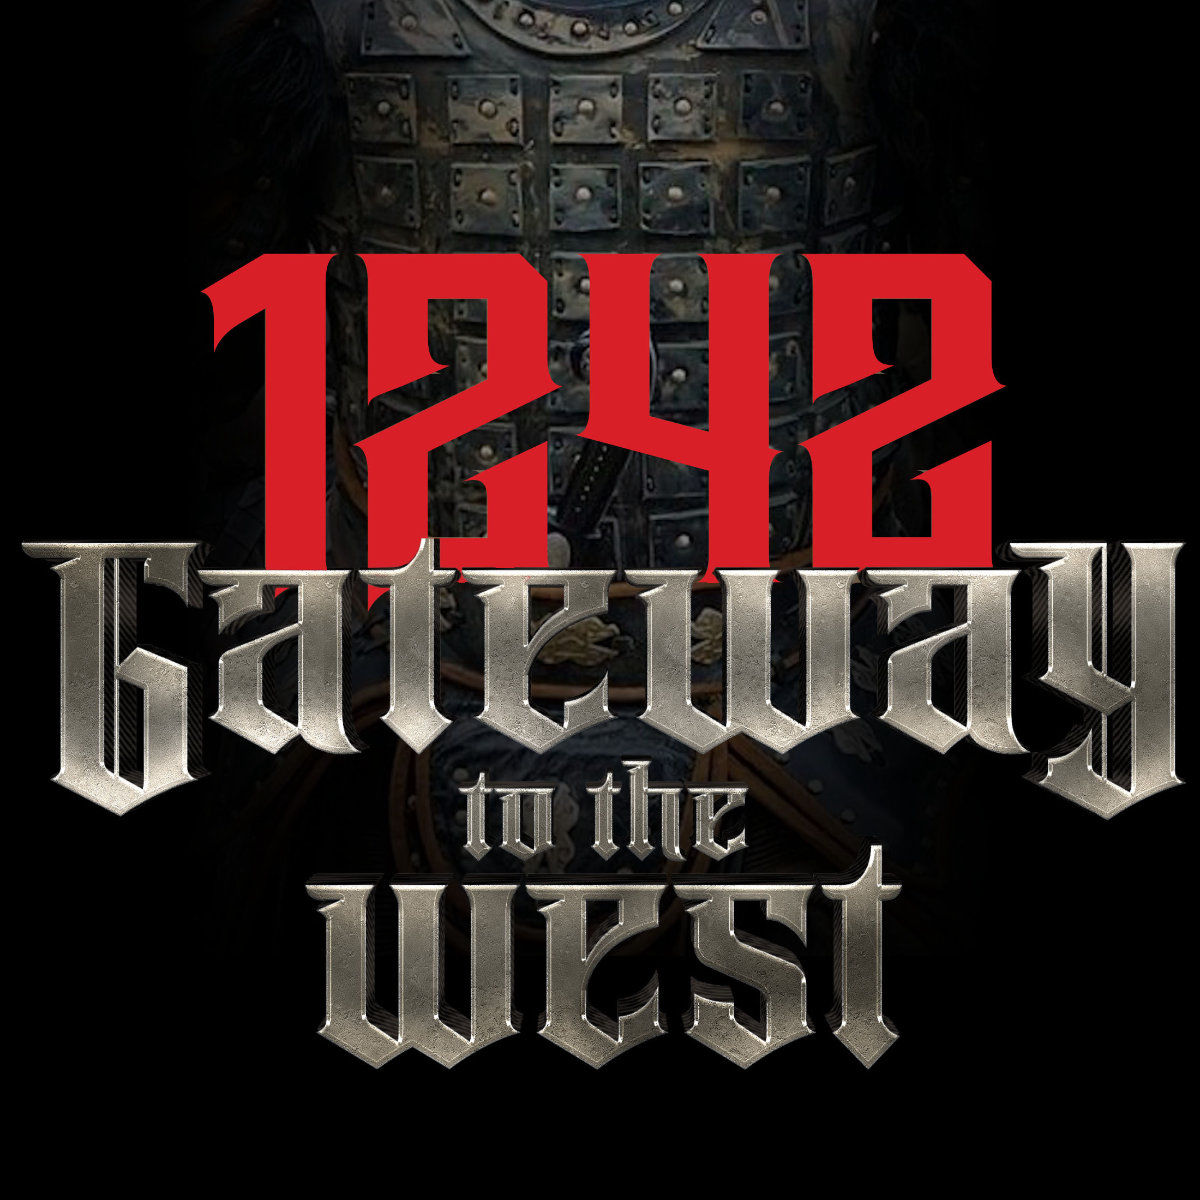 1242 - Gateway to the west movie